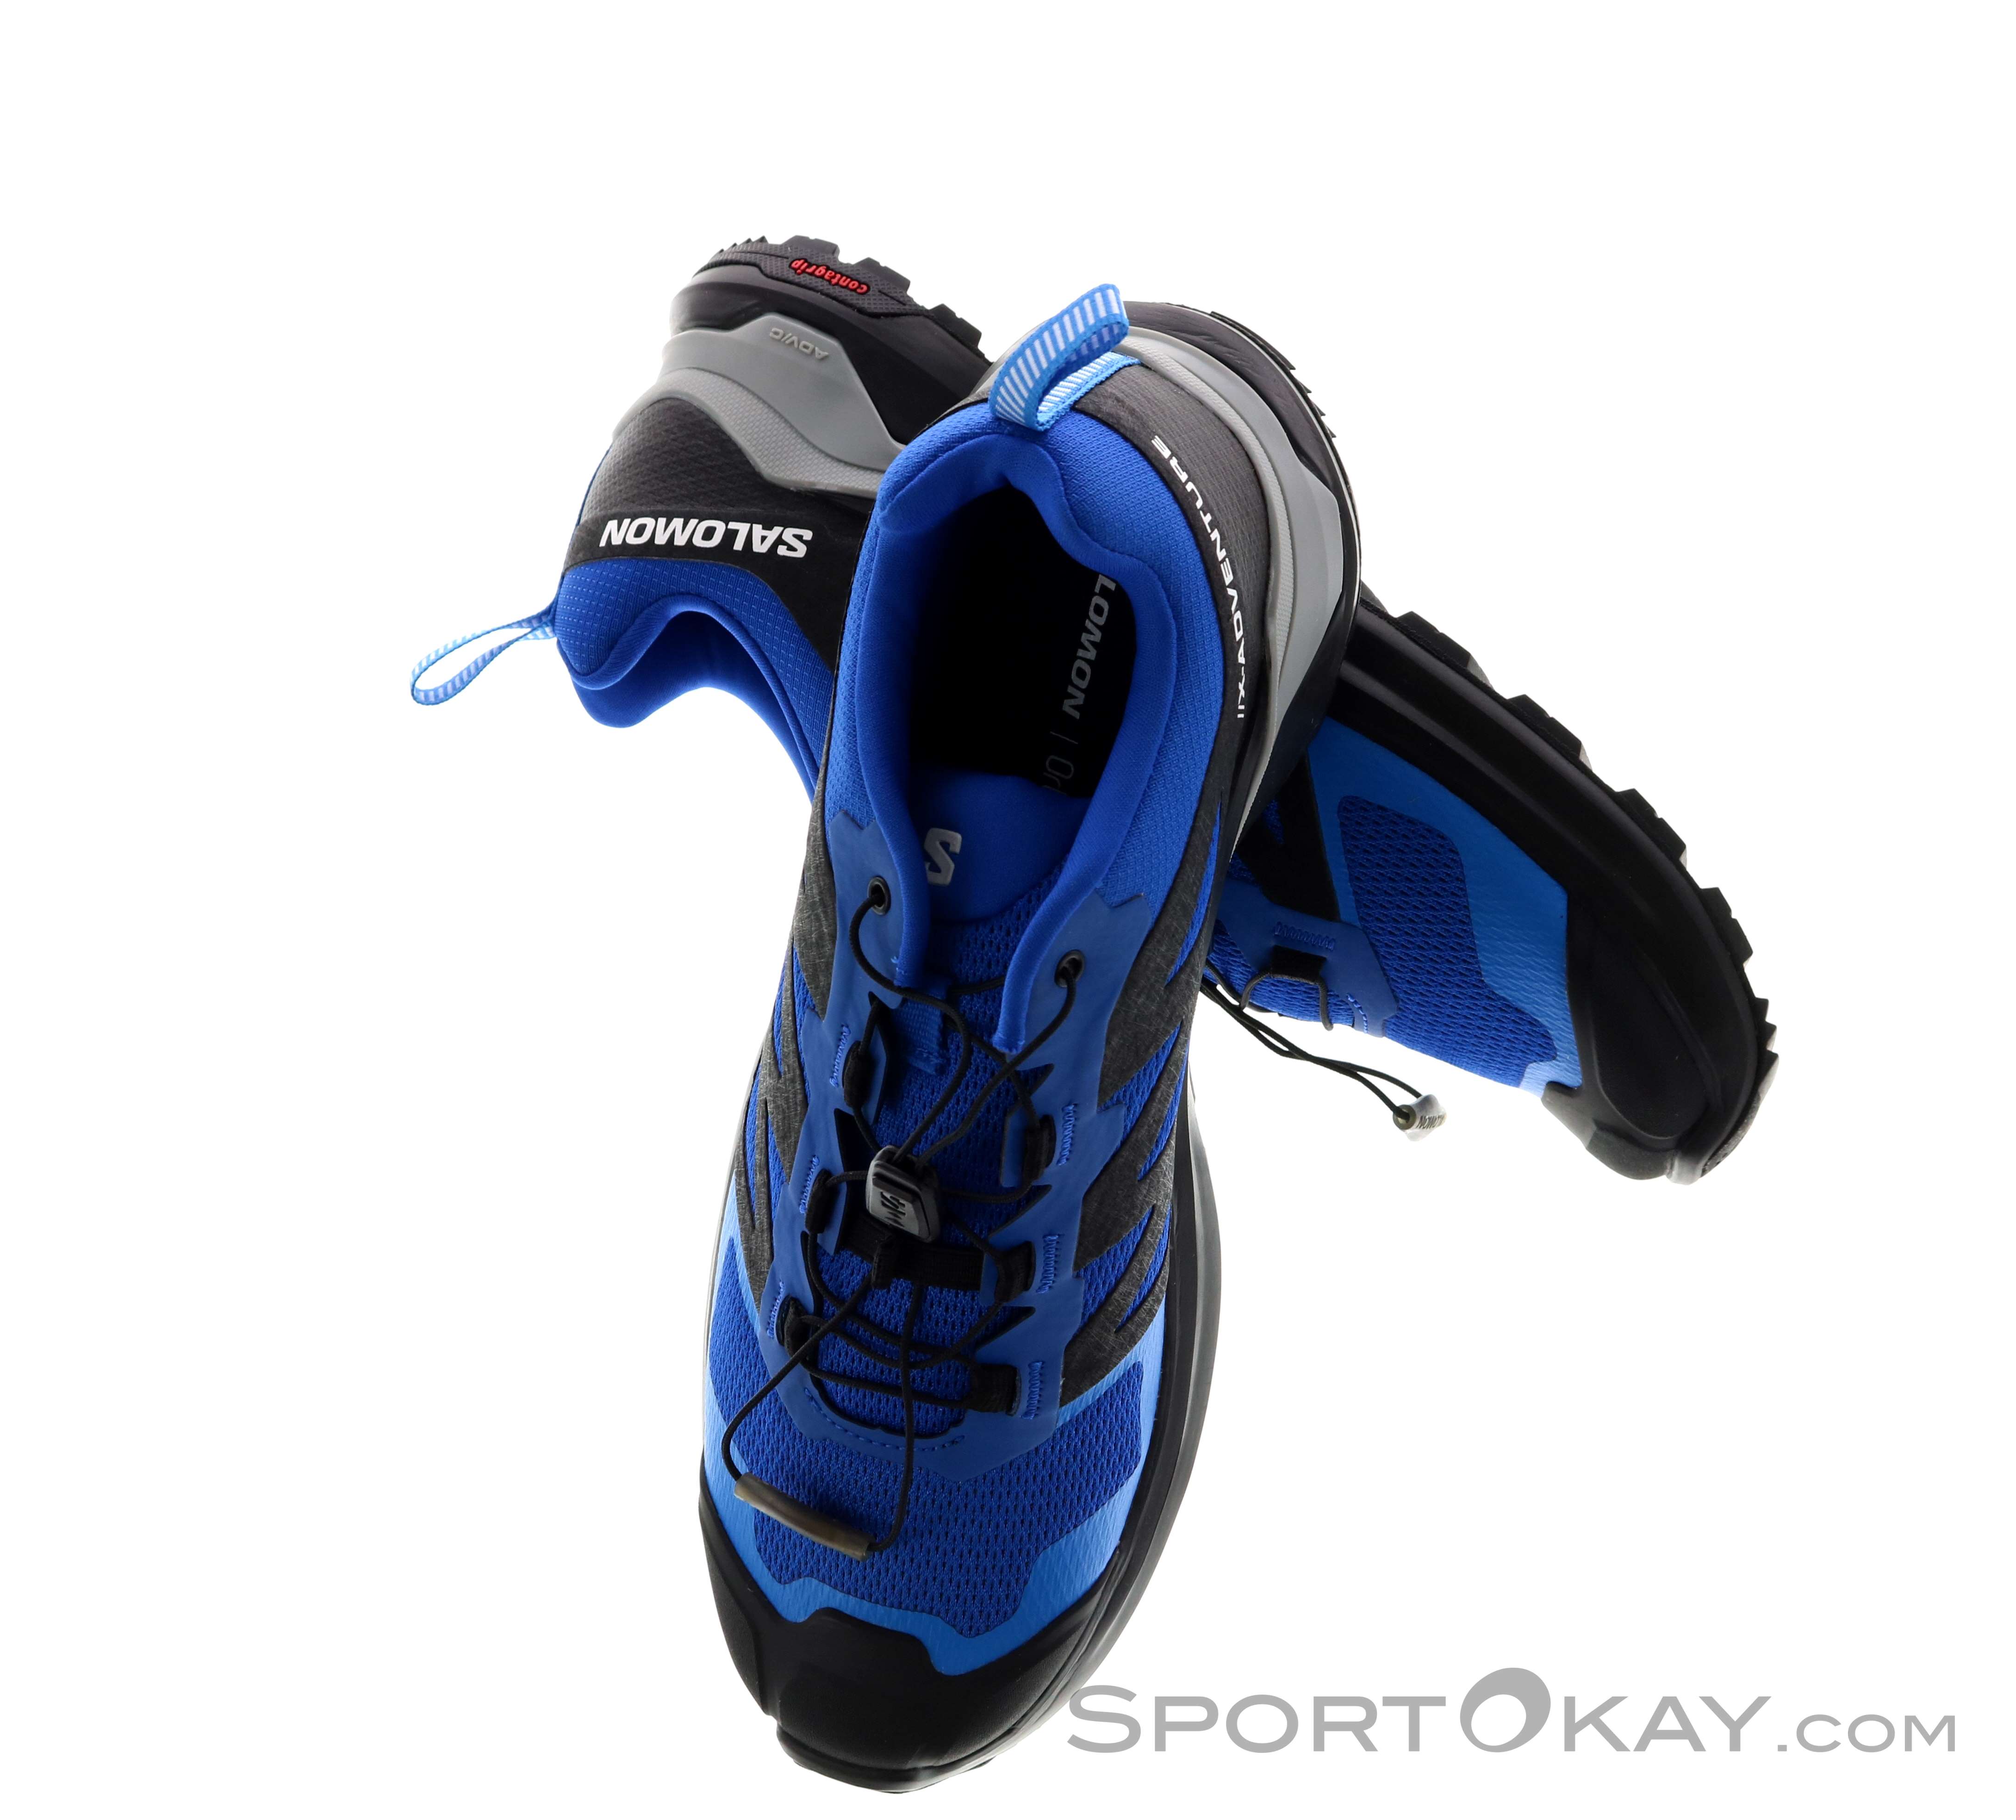 Salomon XA Pro 3D Niños Calzado trail running - Calzado de marcha para  rastreo - Calzado para marcha - Marcha - Todos